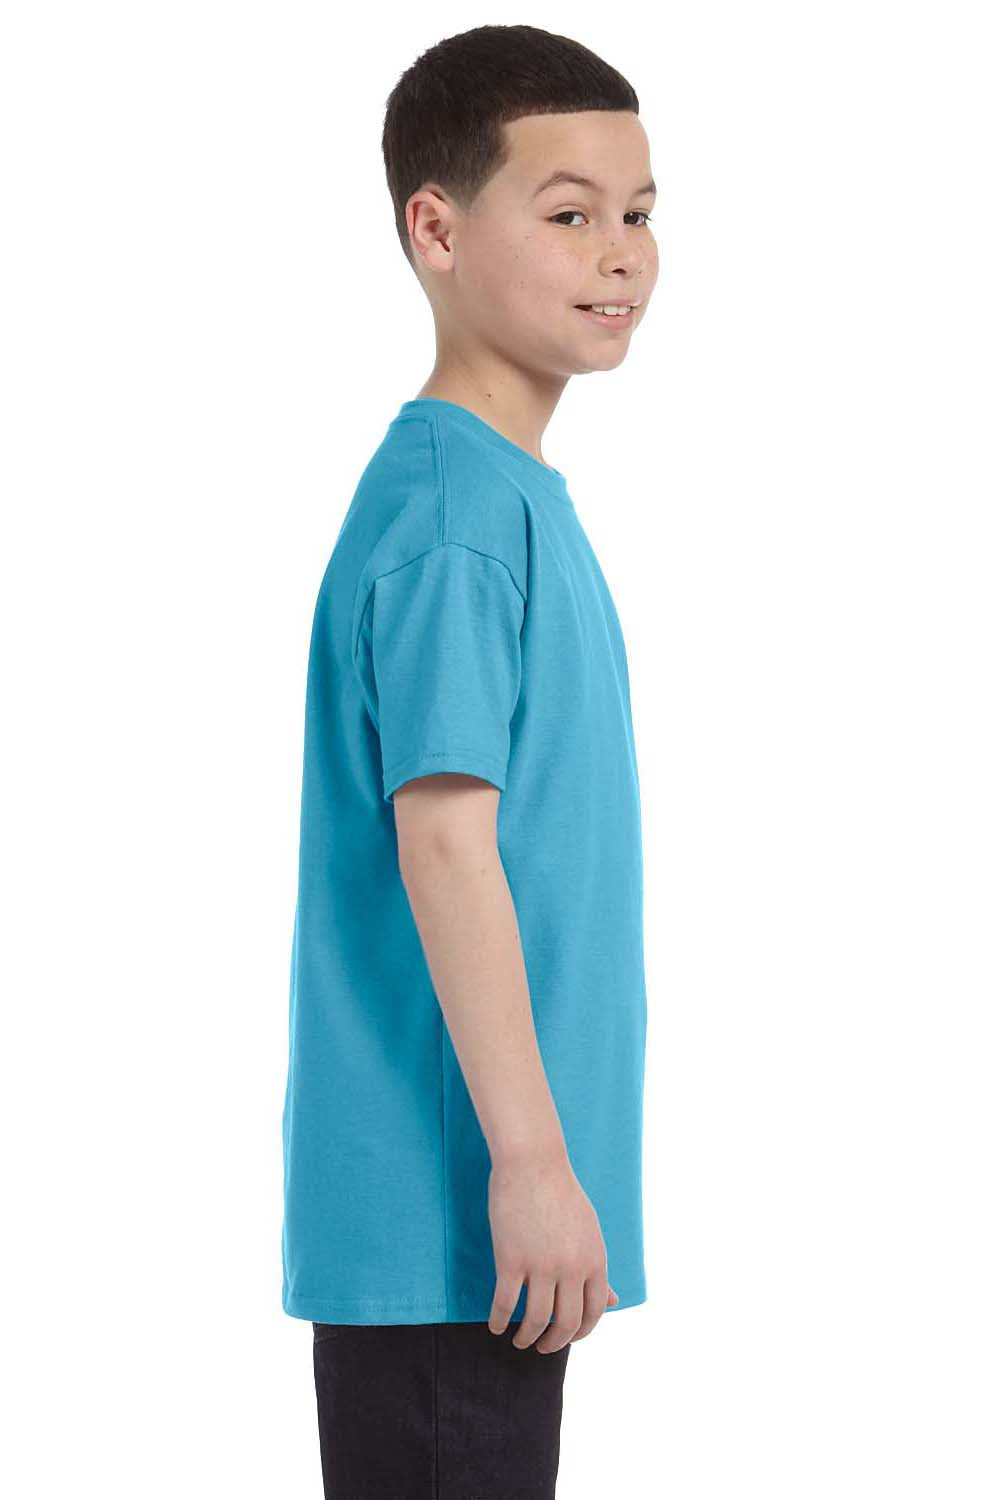 Jerzees 29B Youth Dri-Power Moisture Wicking Short Sleeve Crewneck T-Shirt Aquatic Blue Side